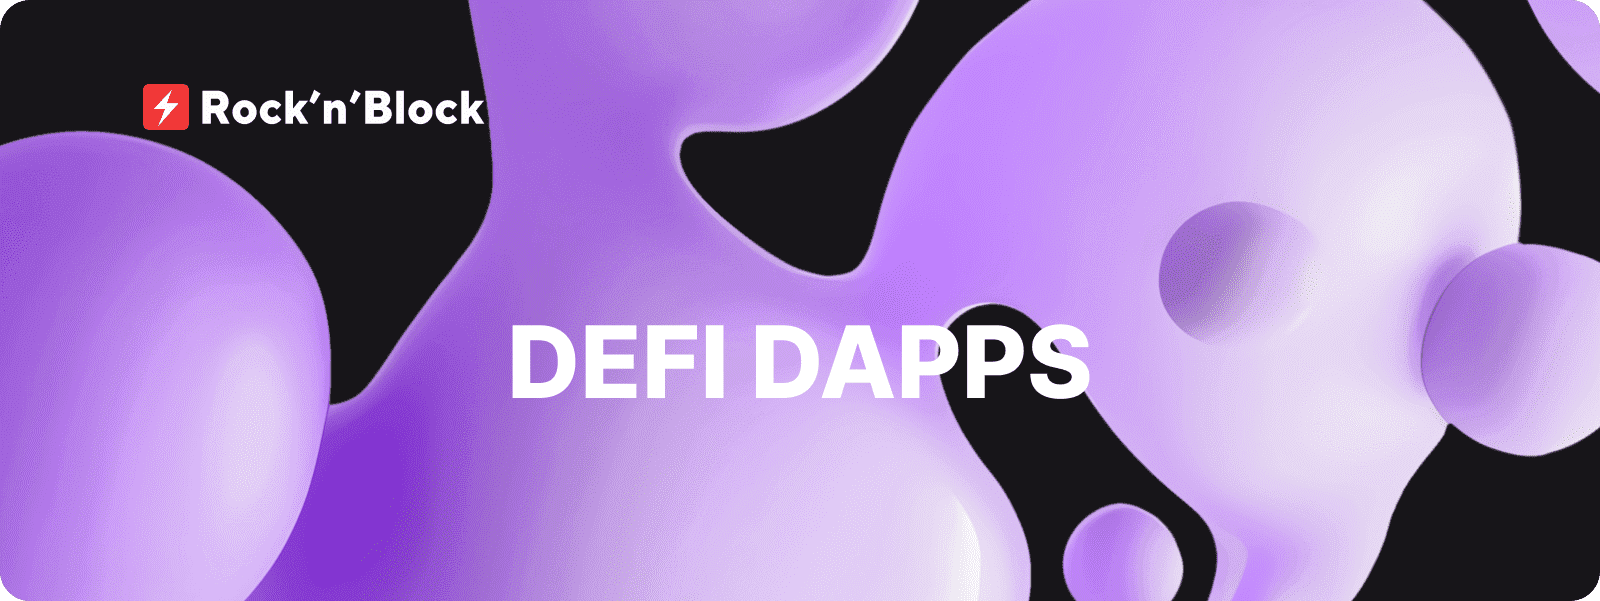 Key Considerations for dApp DevelopmentDeFi dApps: The Financial Revolution